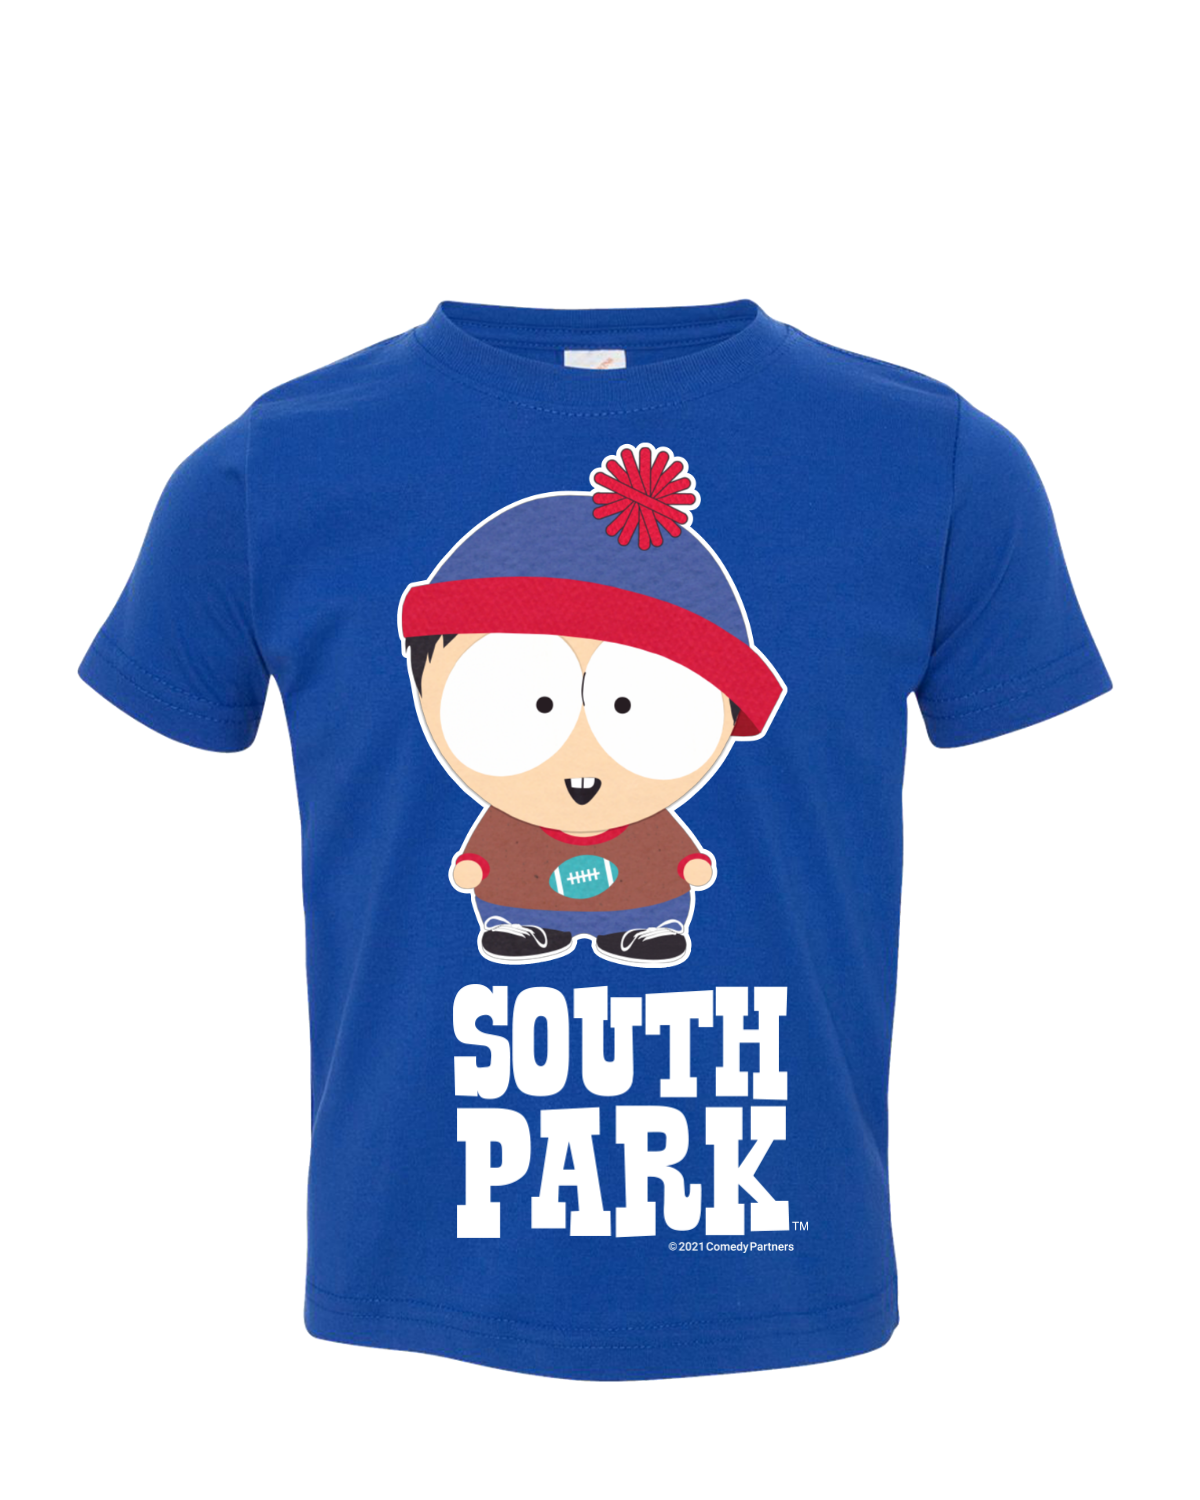 South Park Baby Stan Kids/Toddler T-Shirt